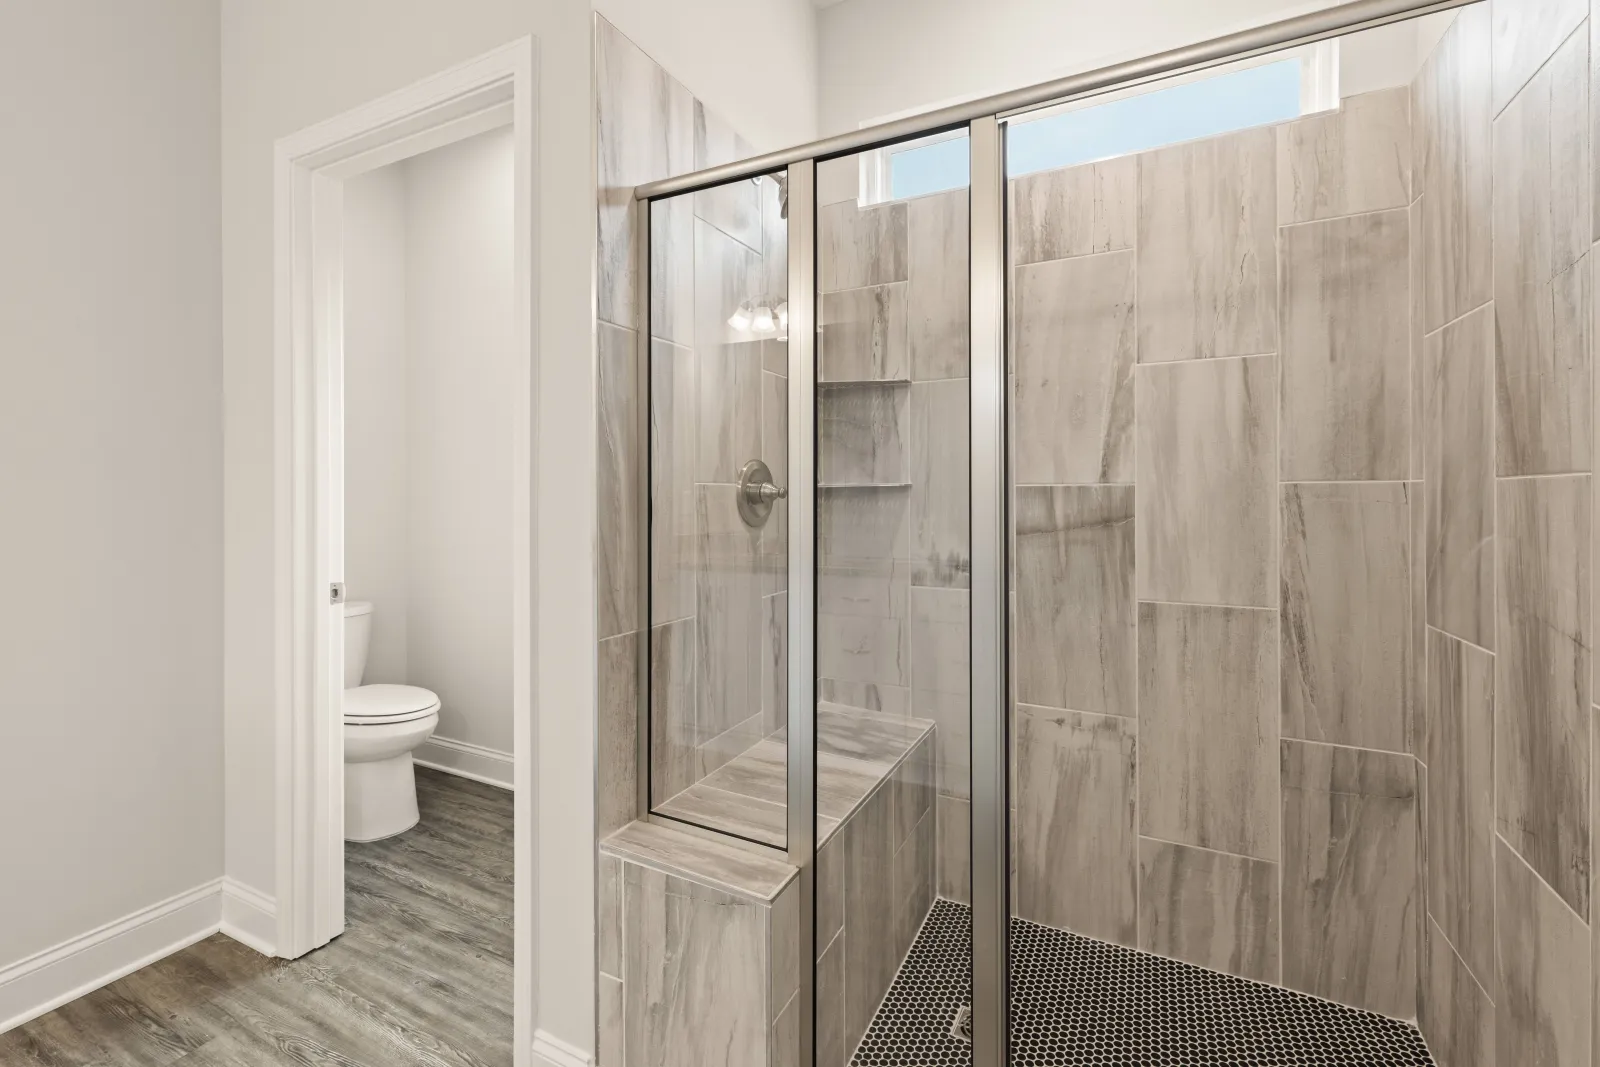 Tiled shower with built-in bench & glass door